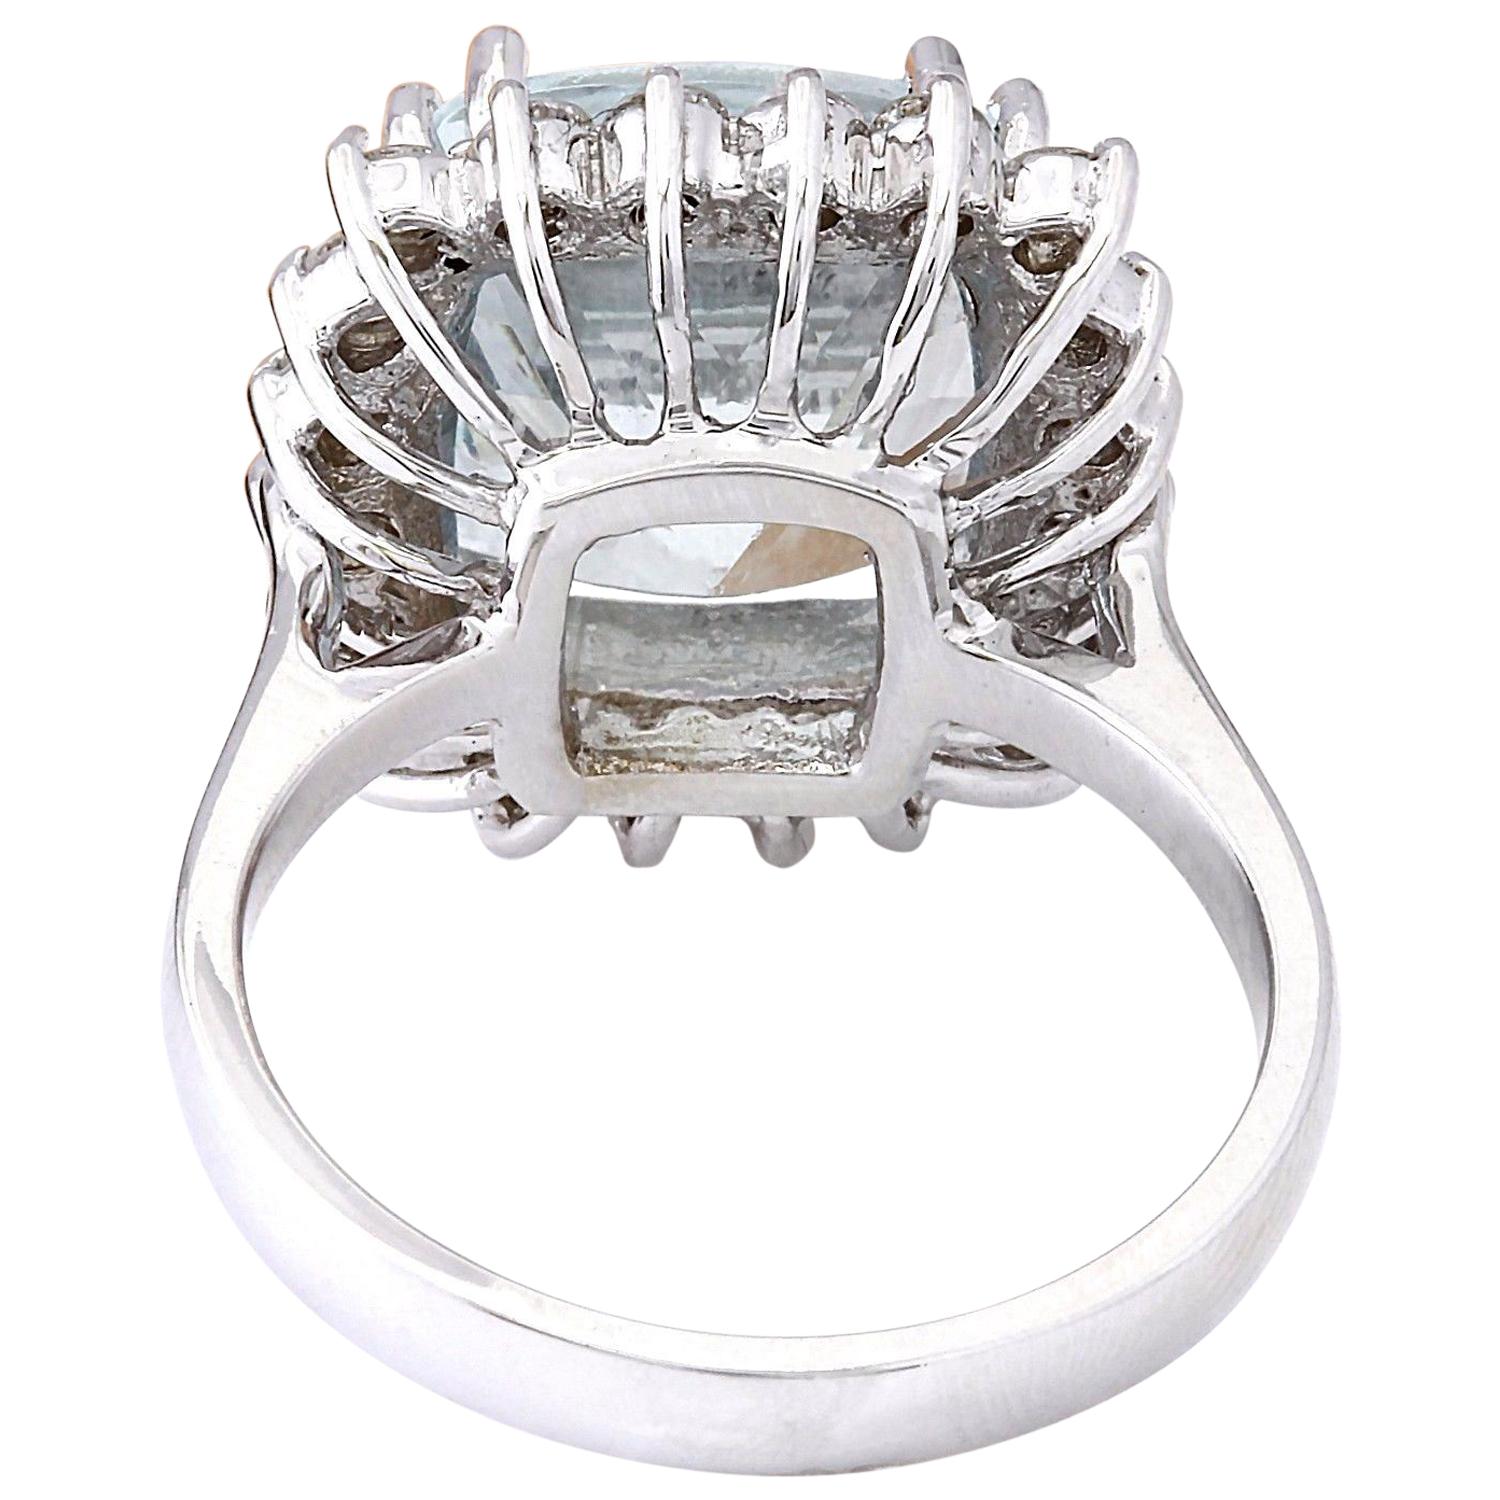 Cushion Cut Aquamarine Diamond Ring In 14 Karat Solid White Gold  For Sale